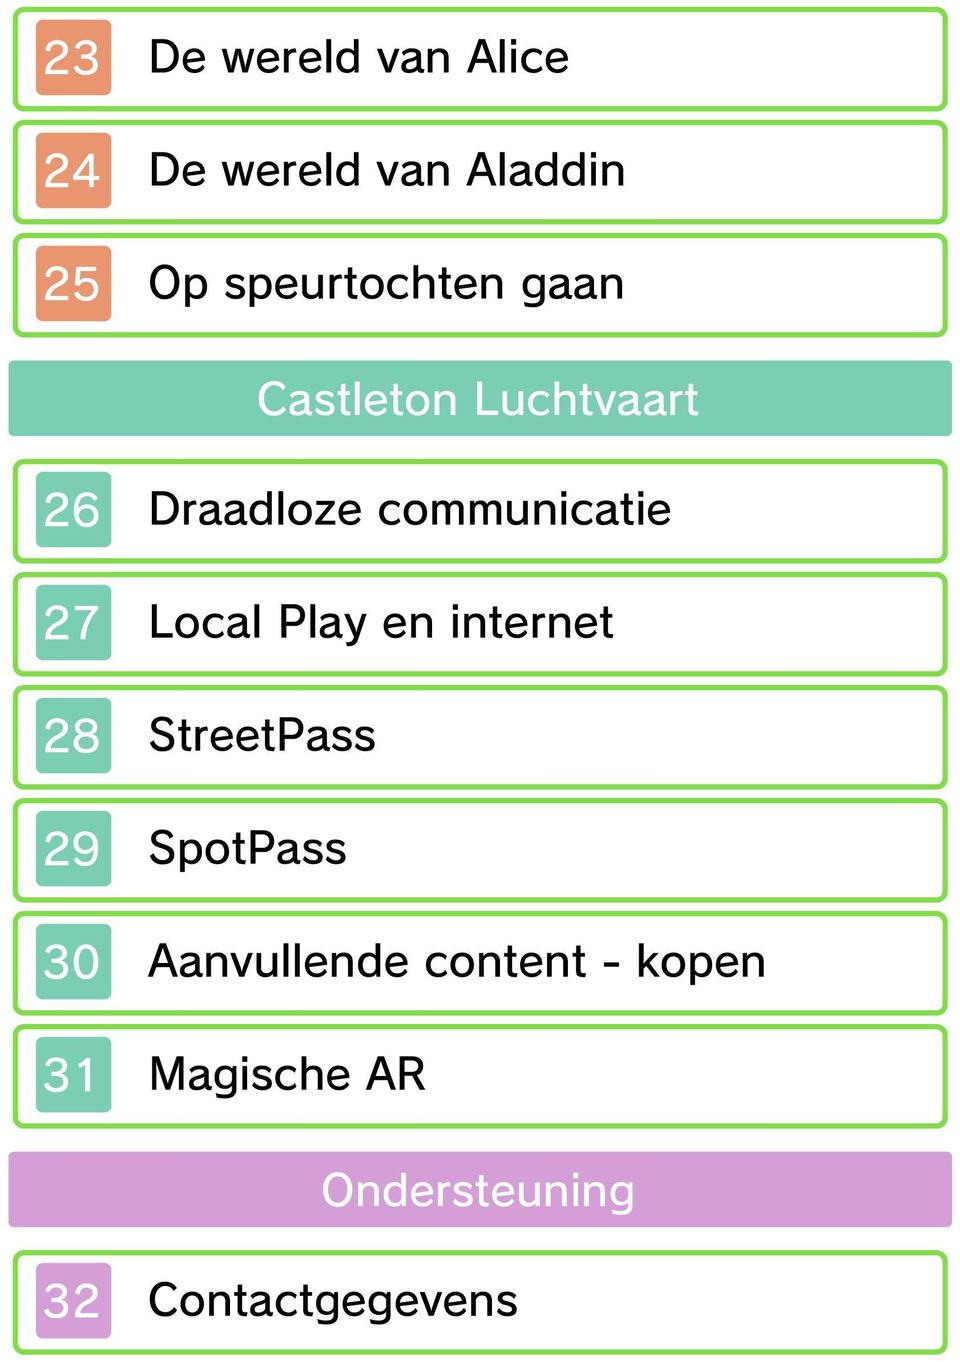 communicatie 27 Local Play en internet 28 StreetPass 29